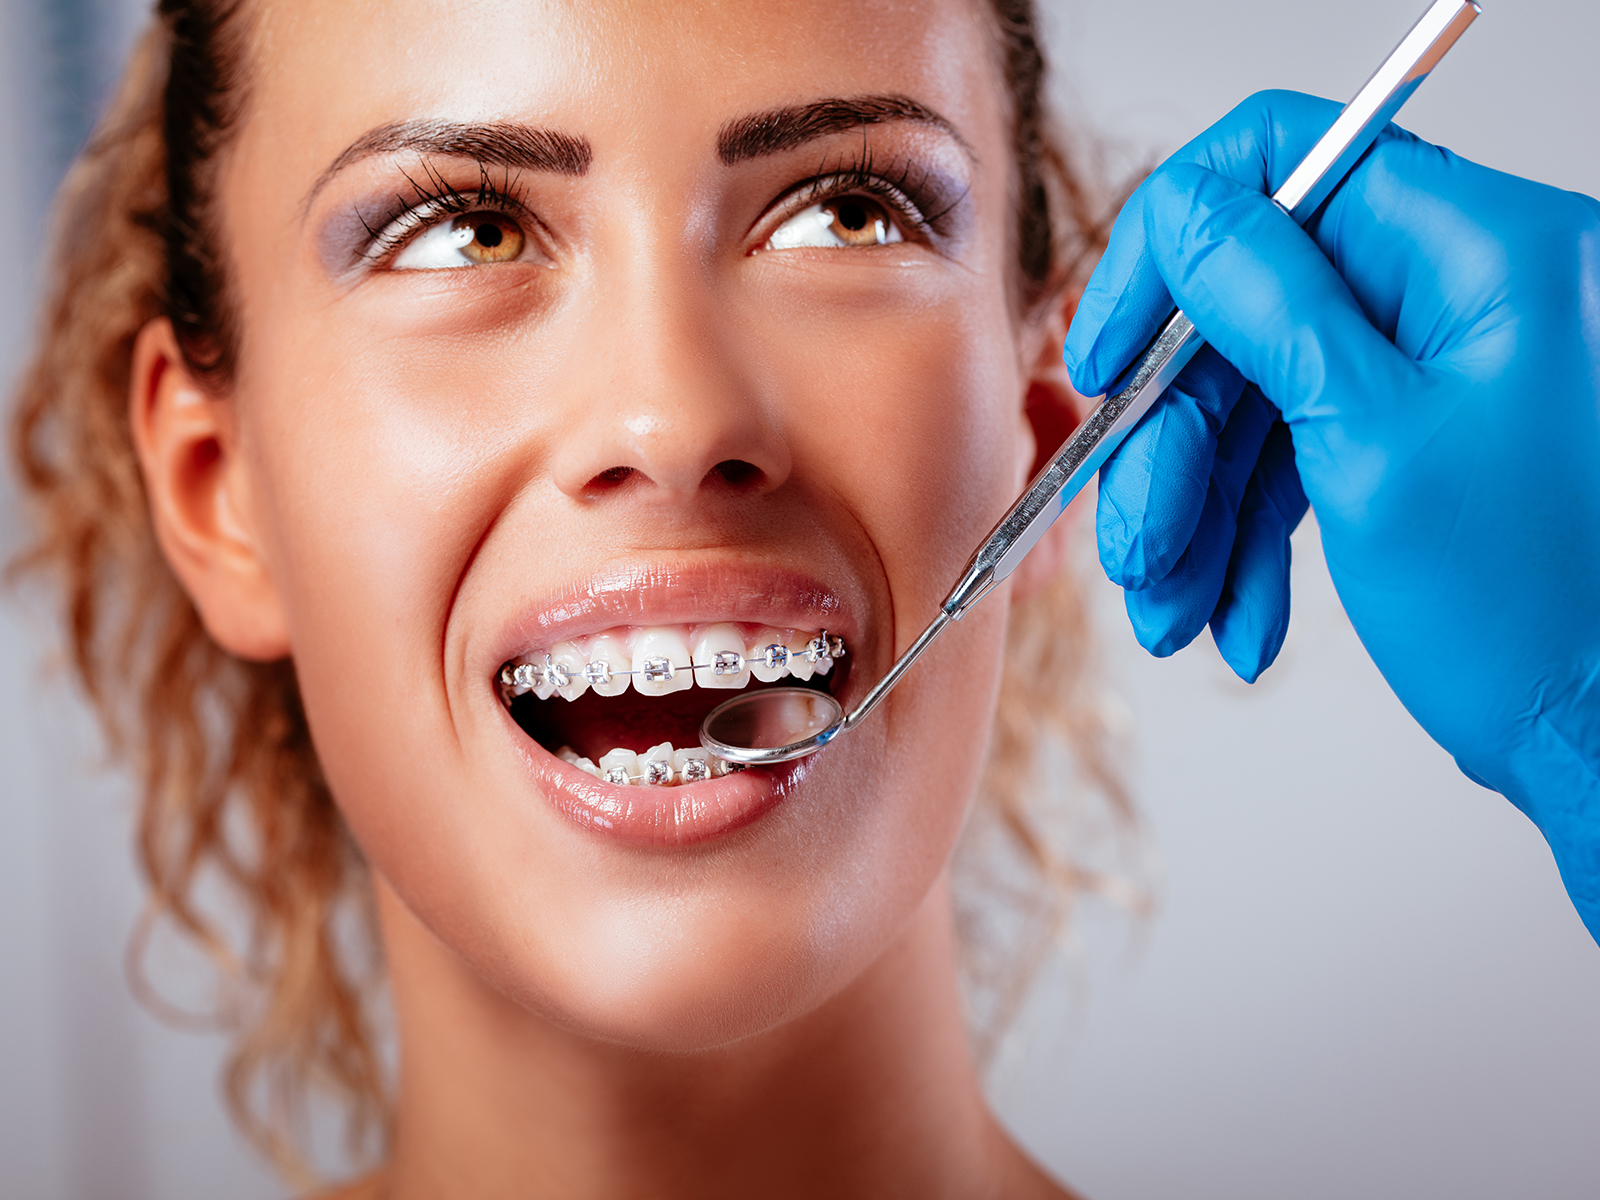 How Do Braces Work To Straighten Your Teeth?